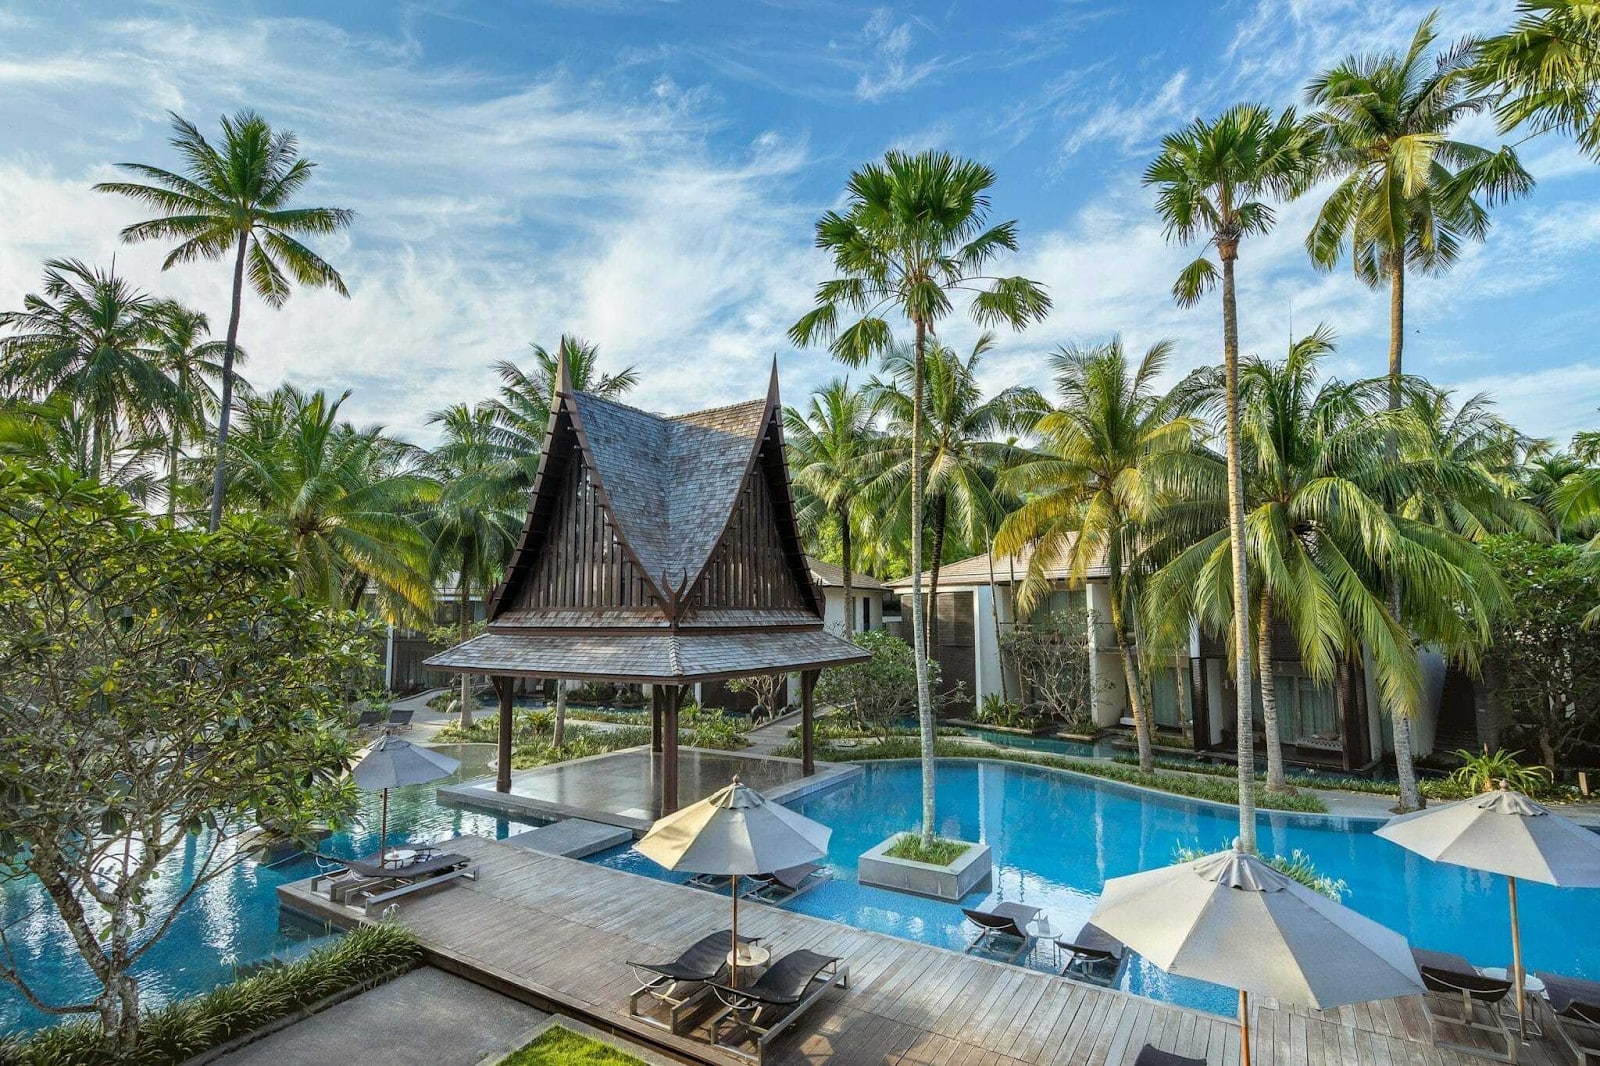 The Twinpalm Resort in Phuket